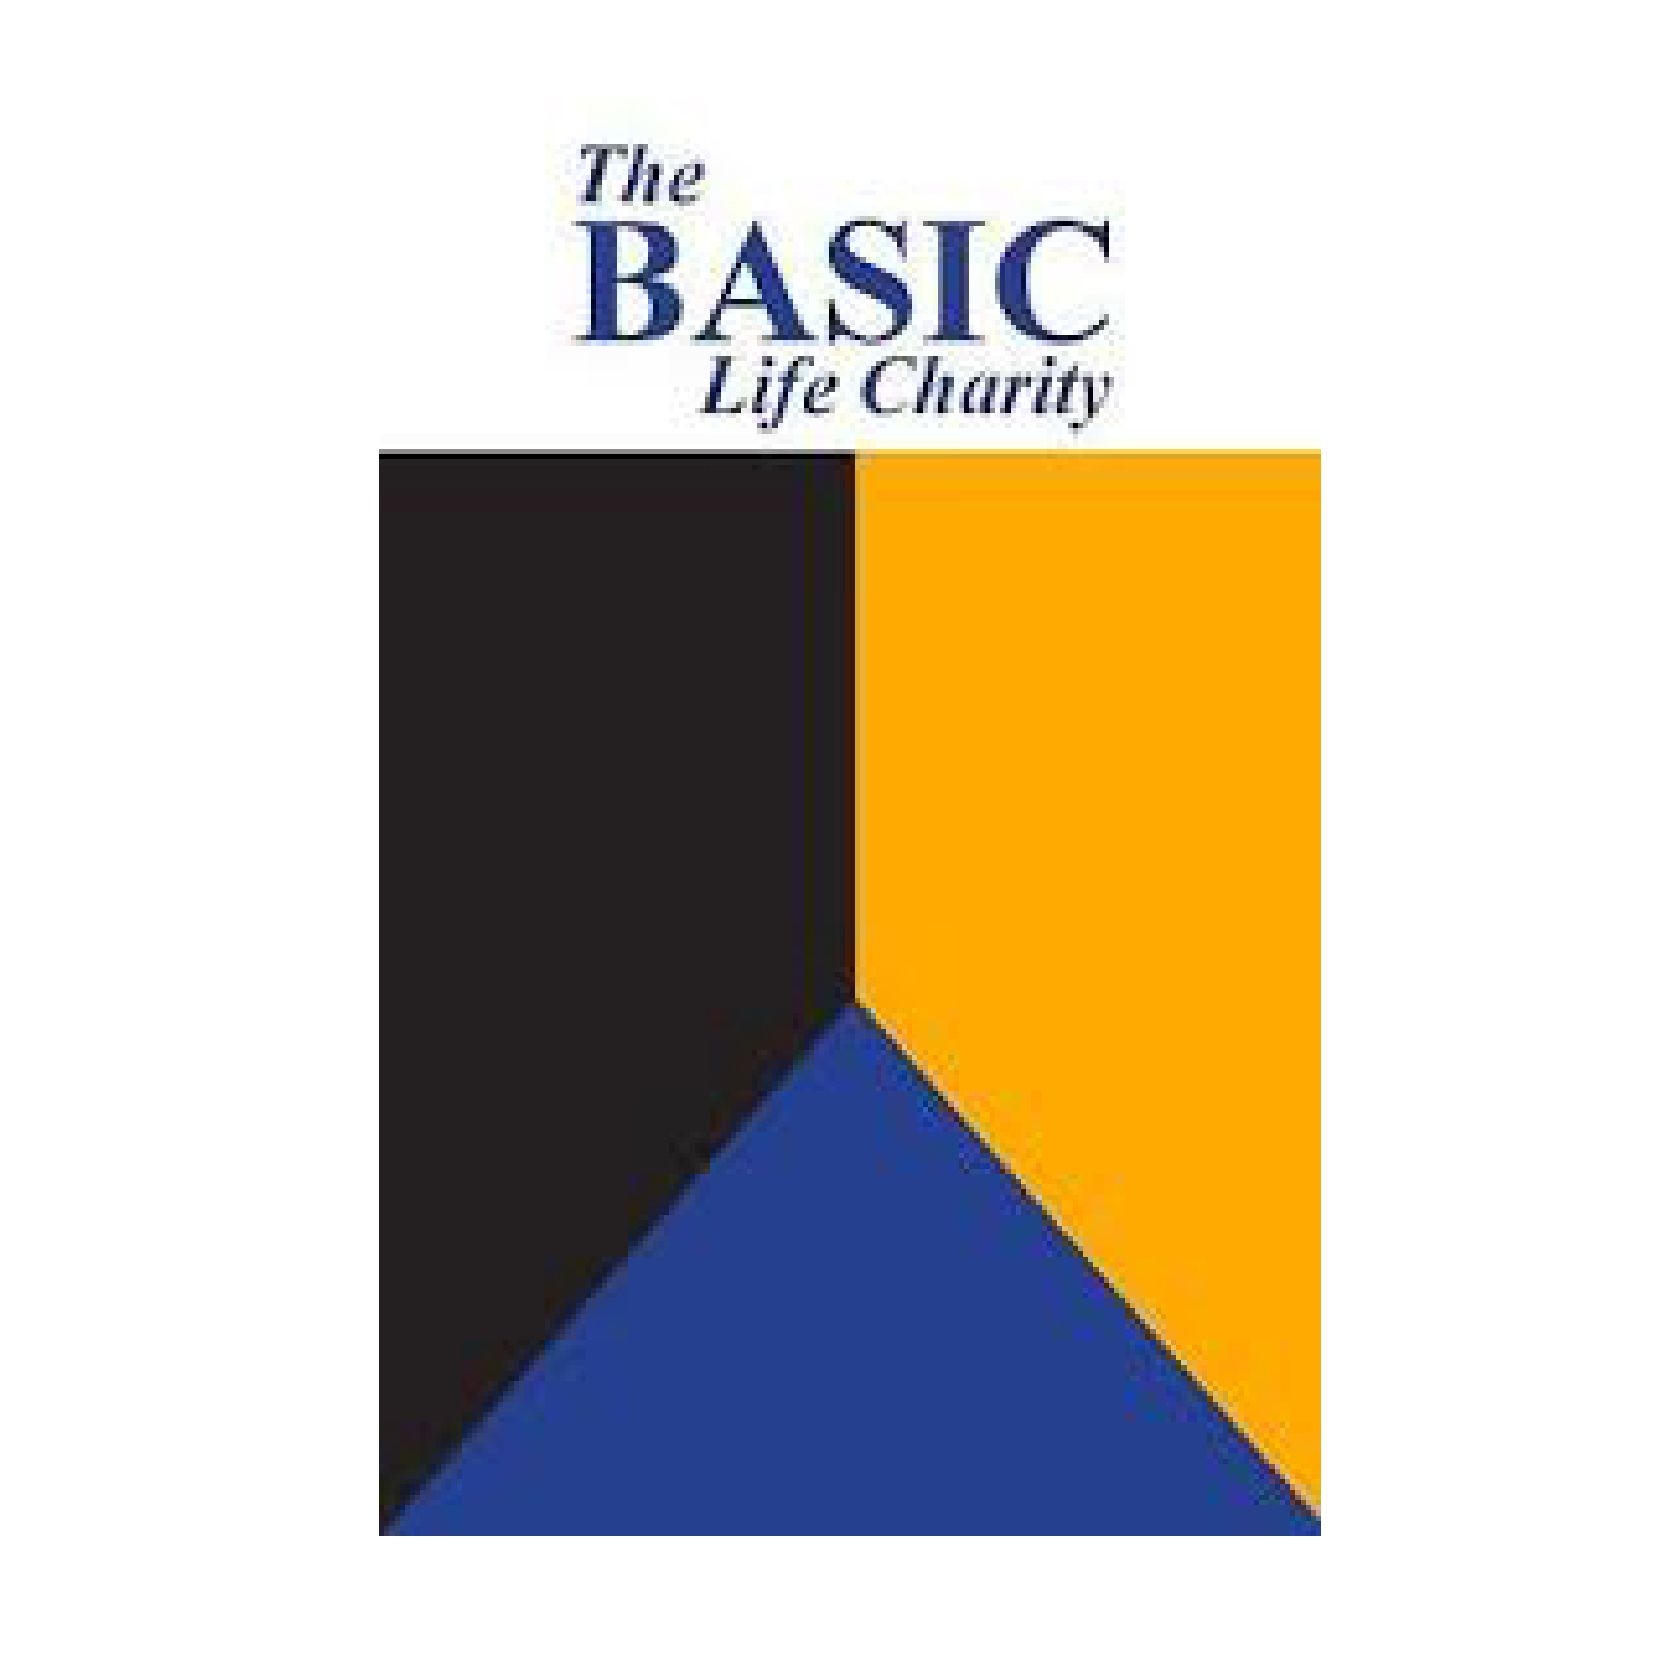 The BASIC Life Charity logo square